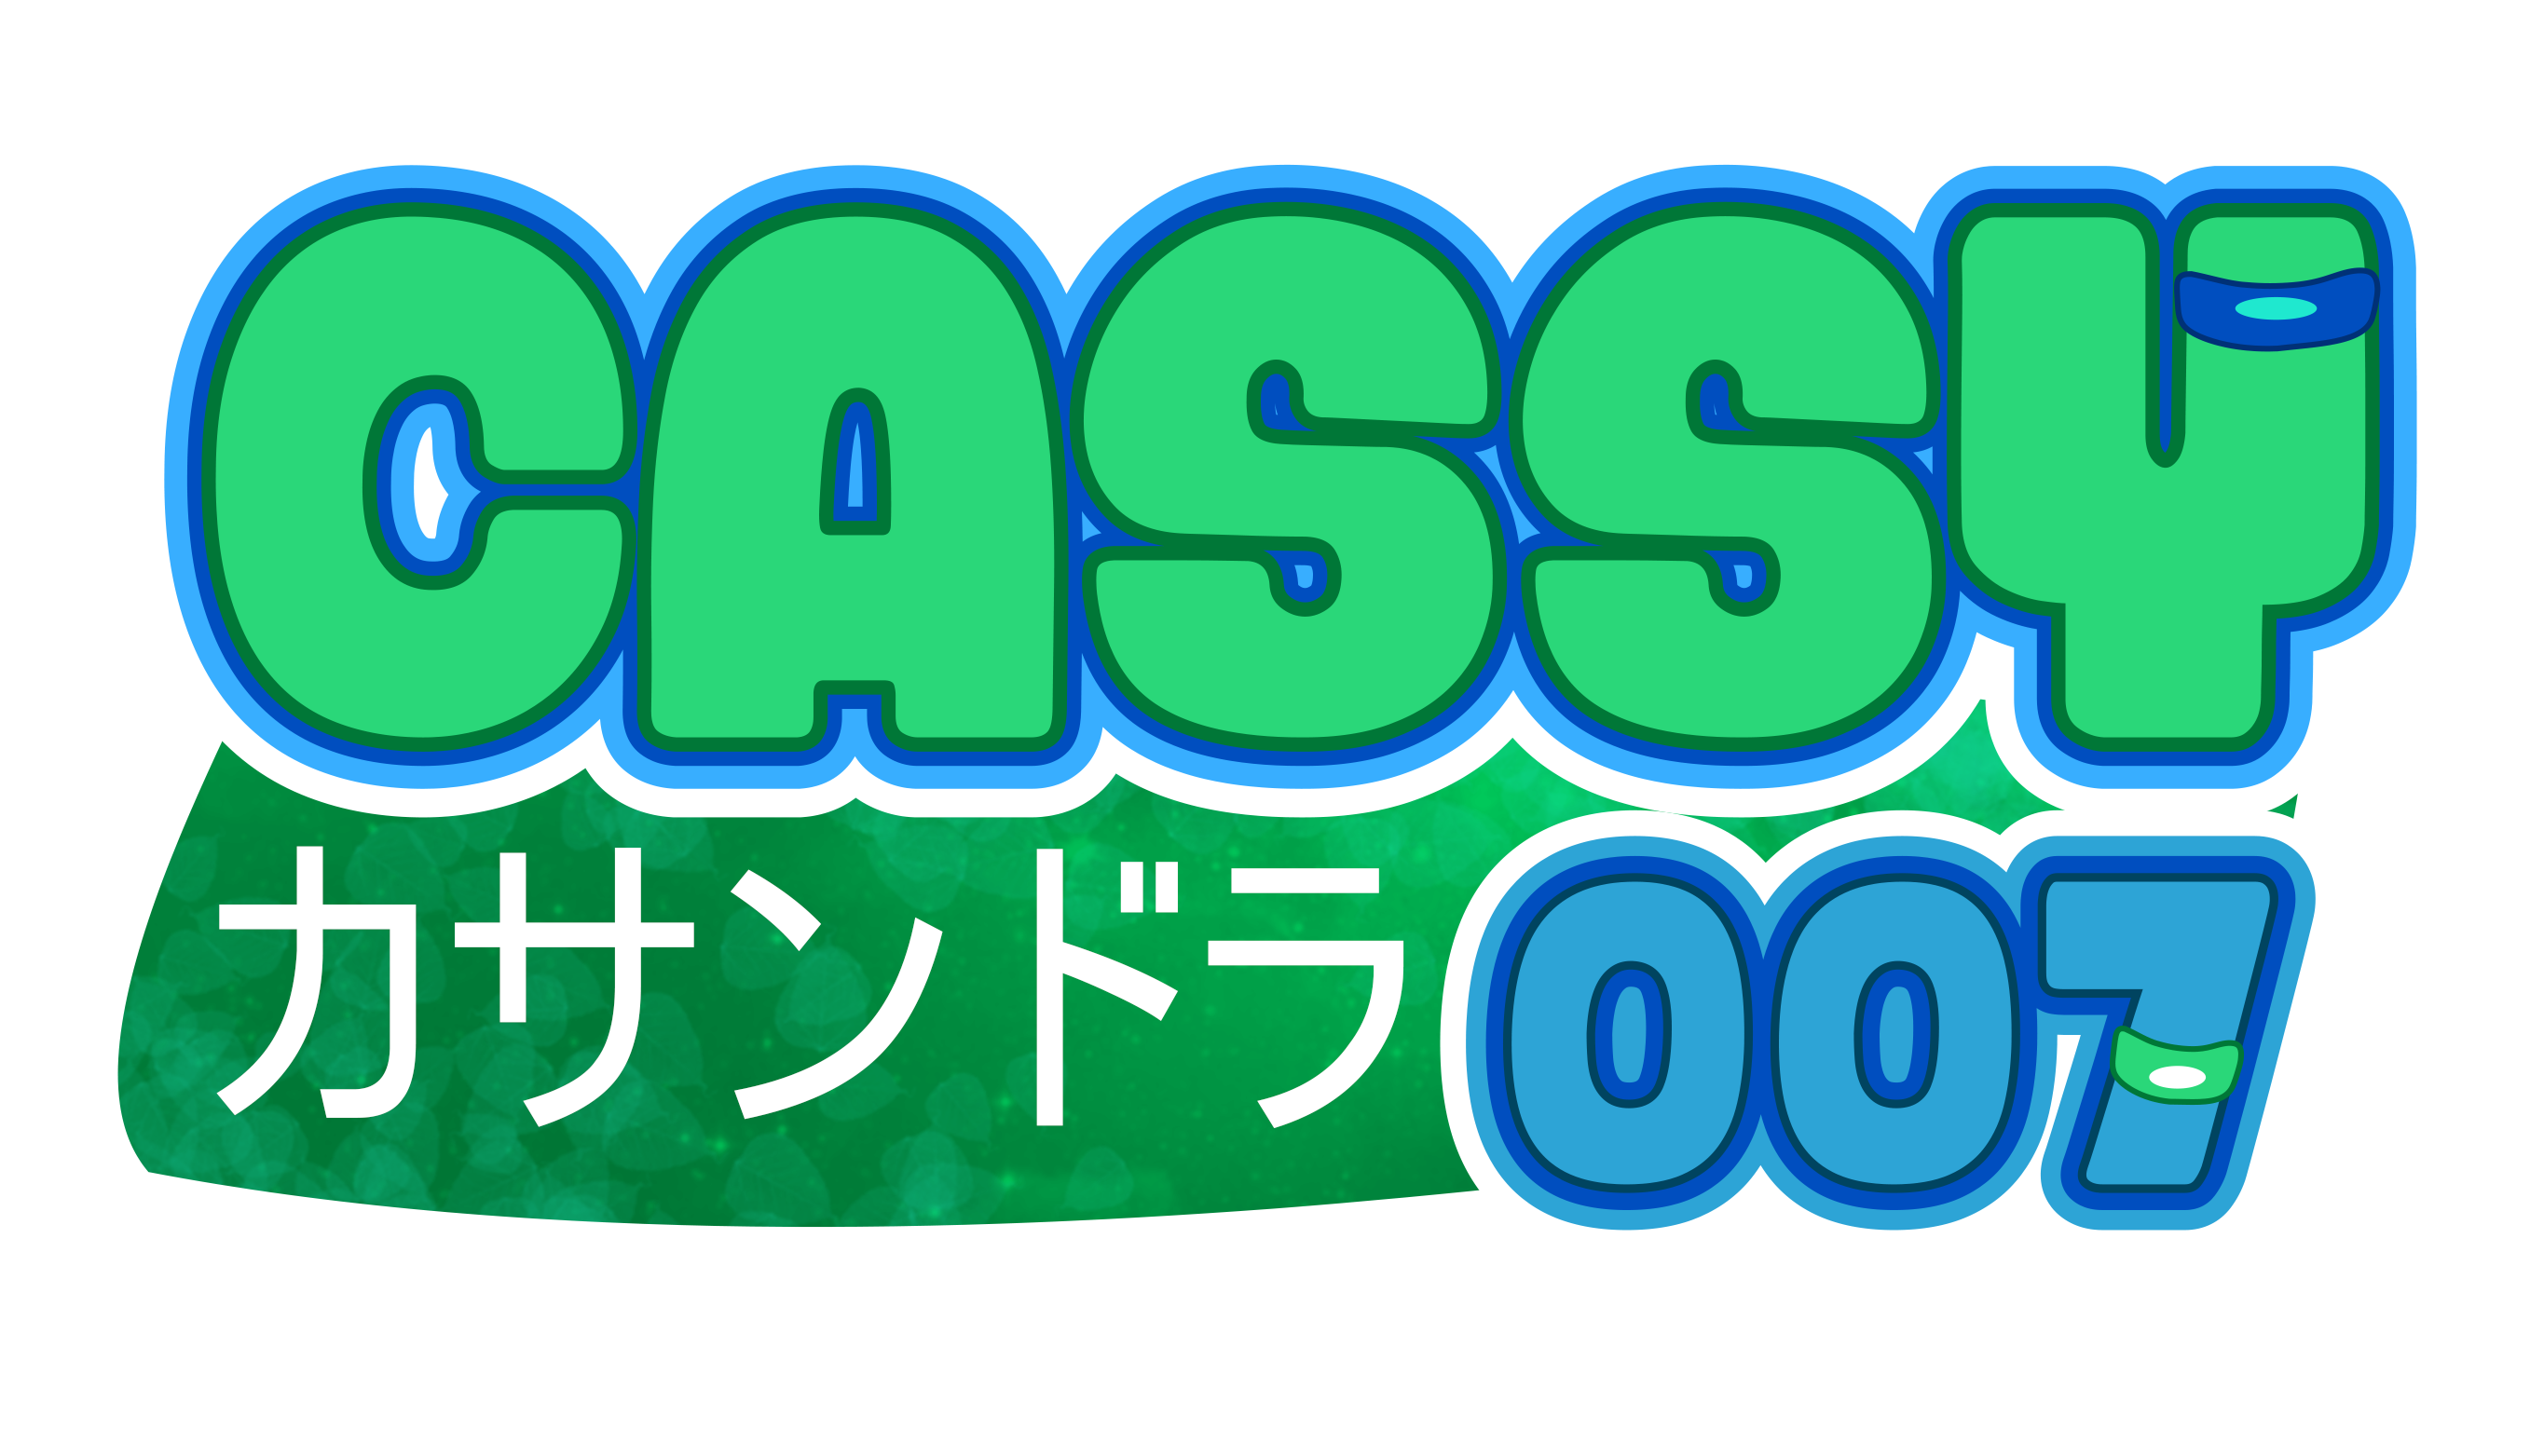 Cassy007 Logo|Commission|